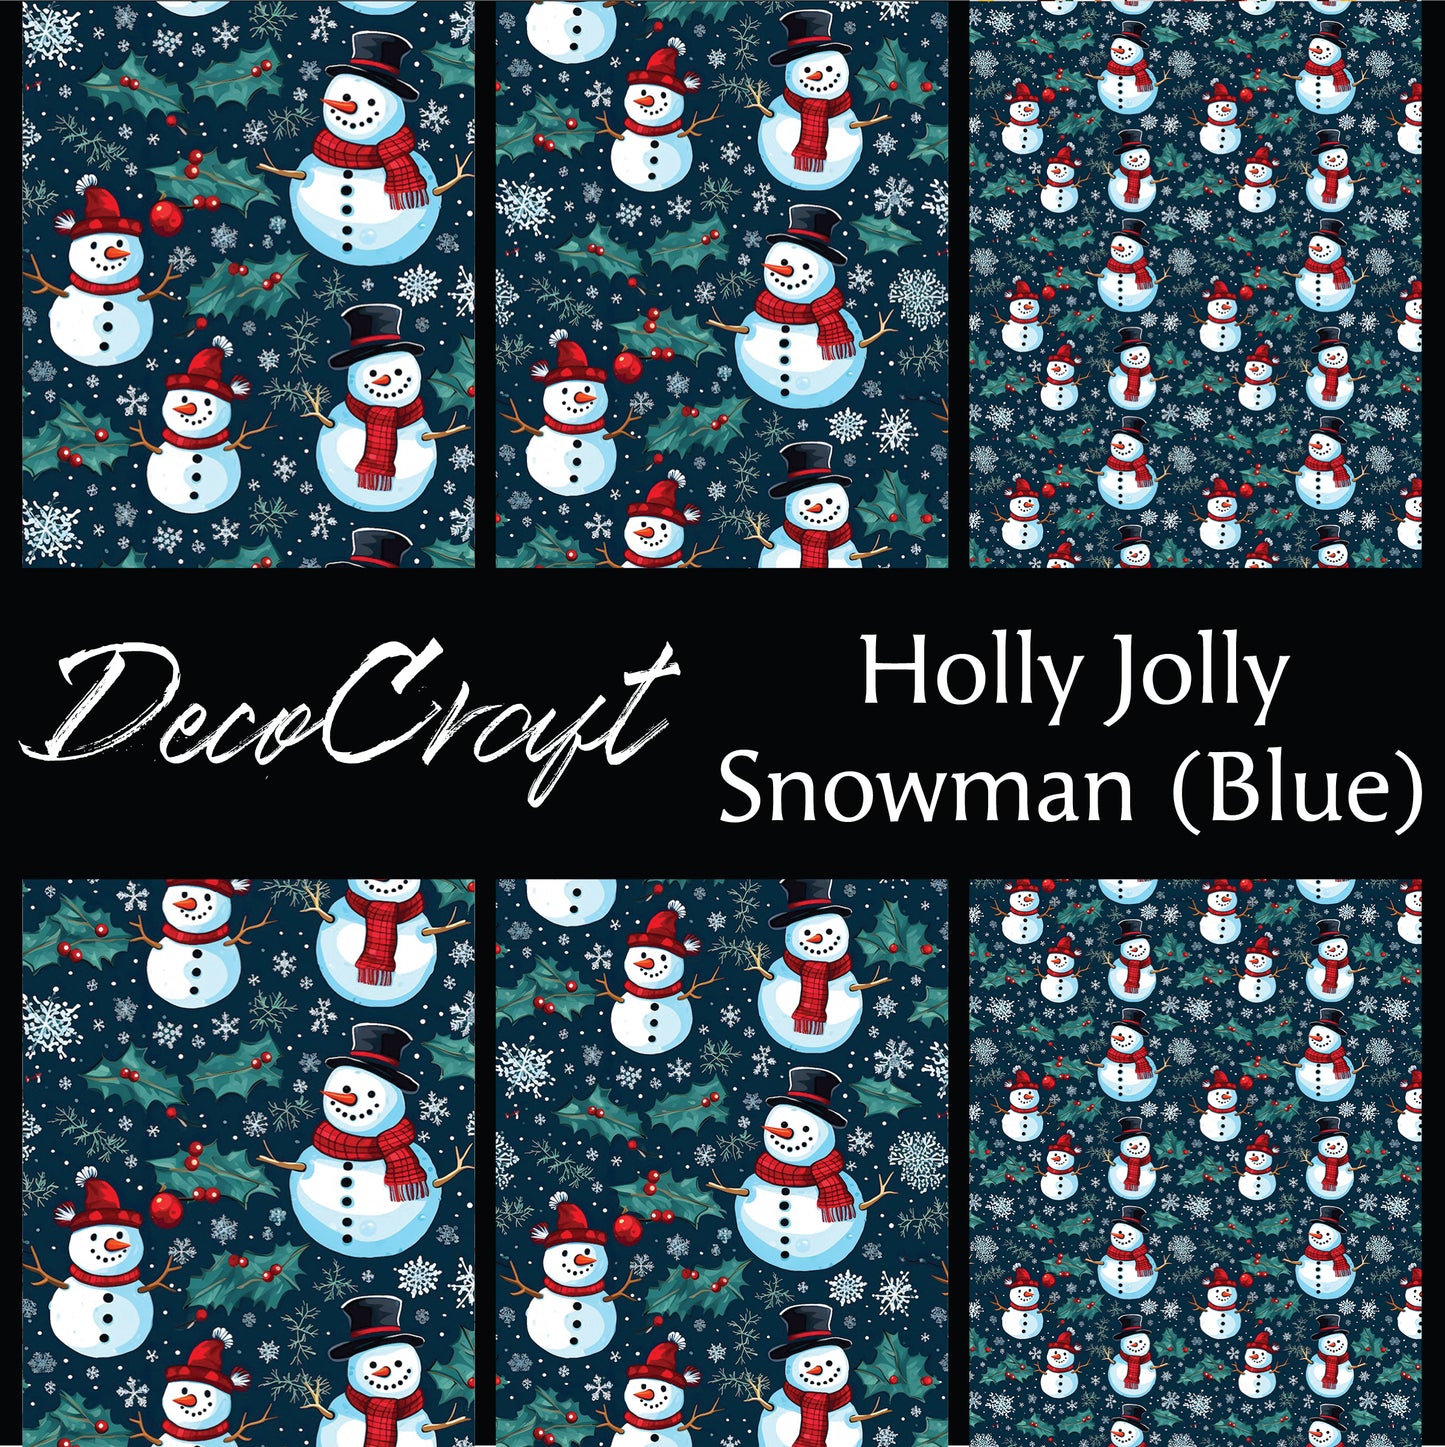 DecoCraft Christmas - Snowman - Holly Jolly Snowman